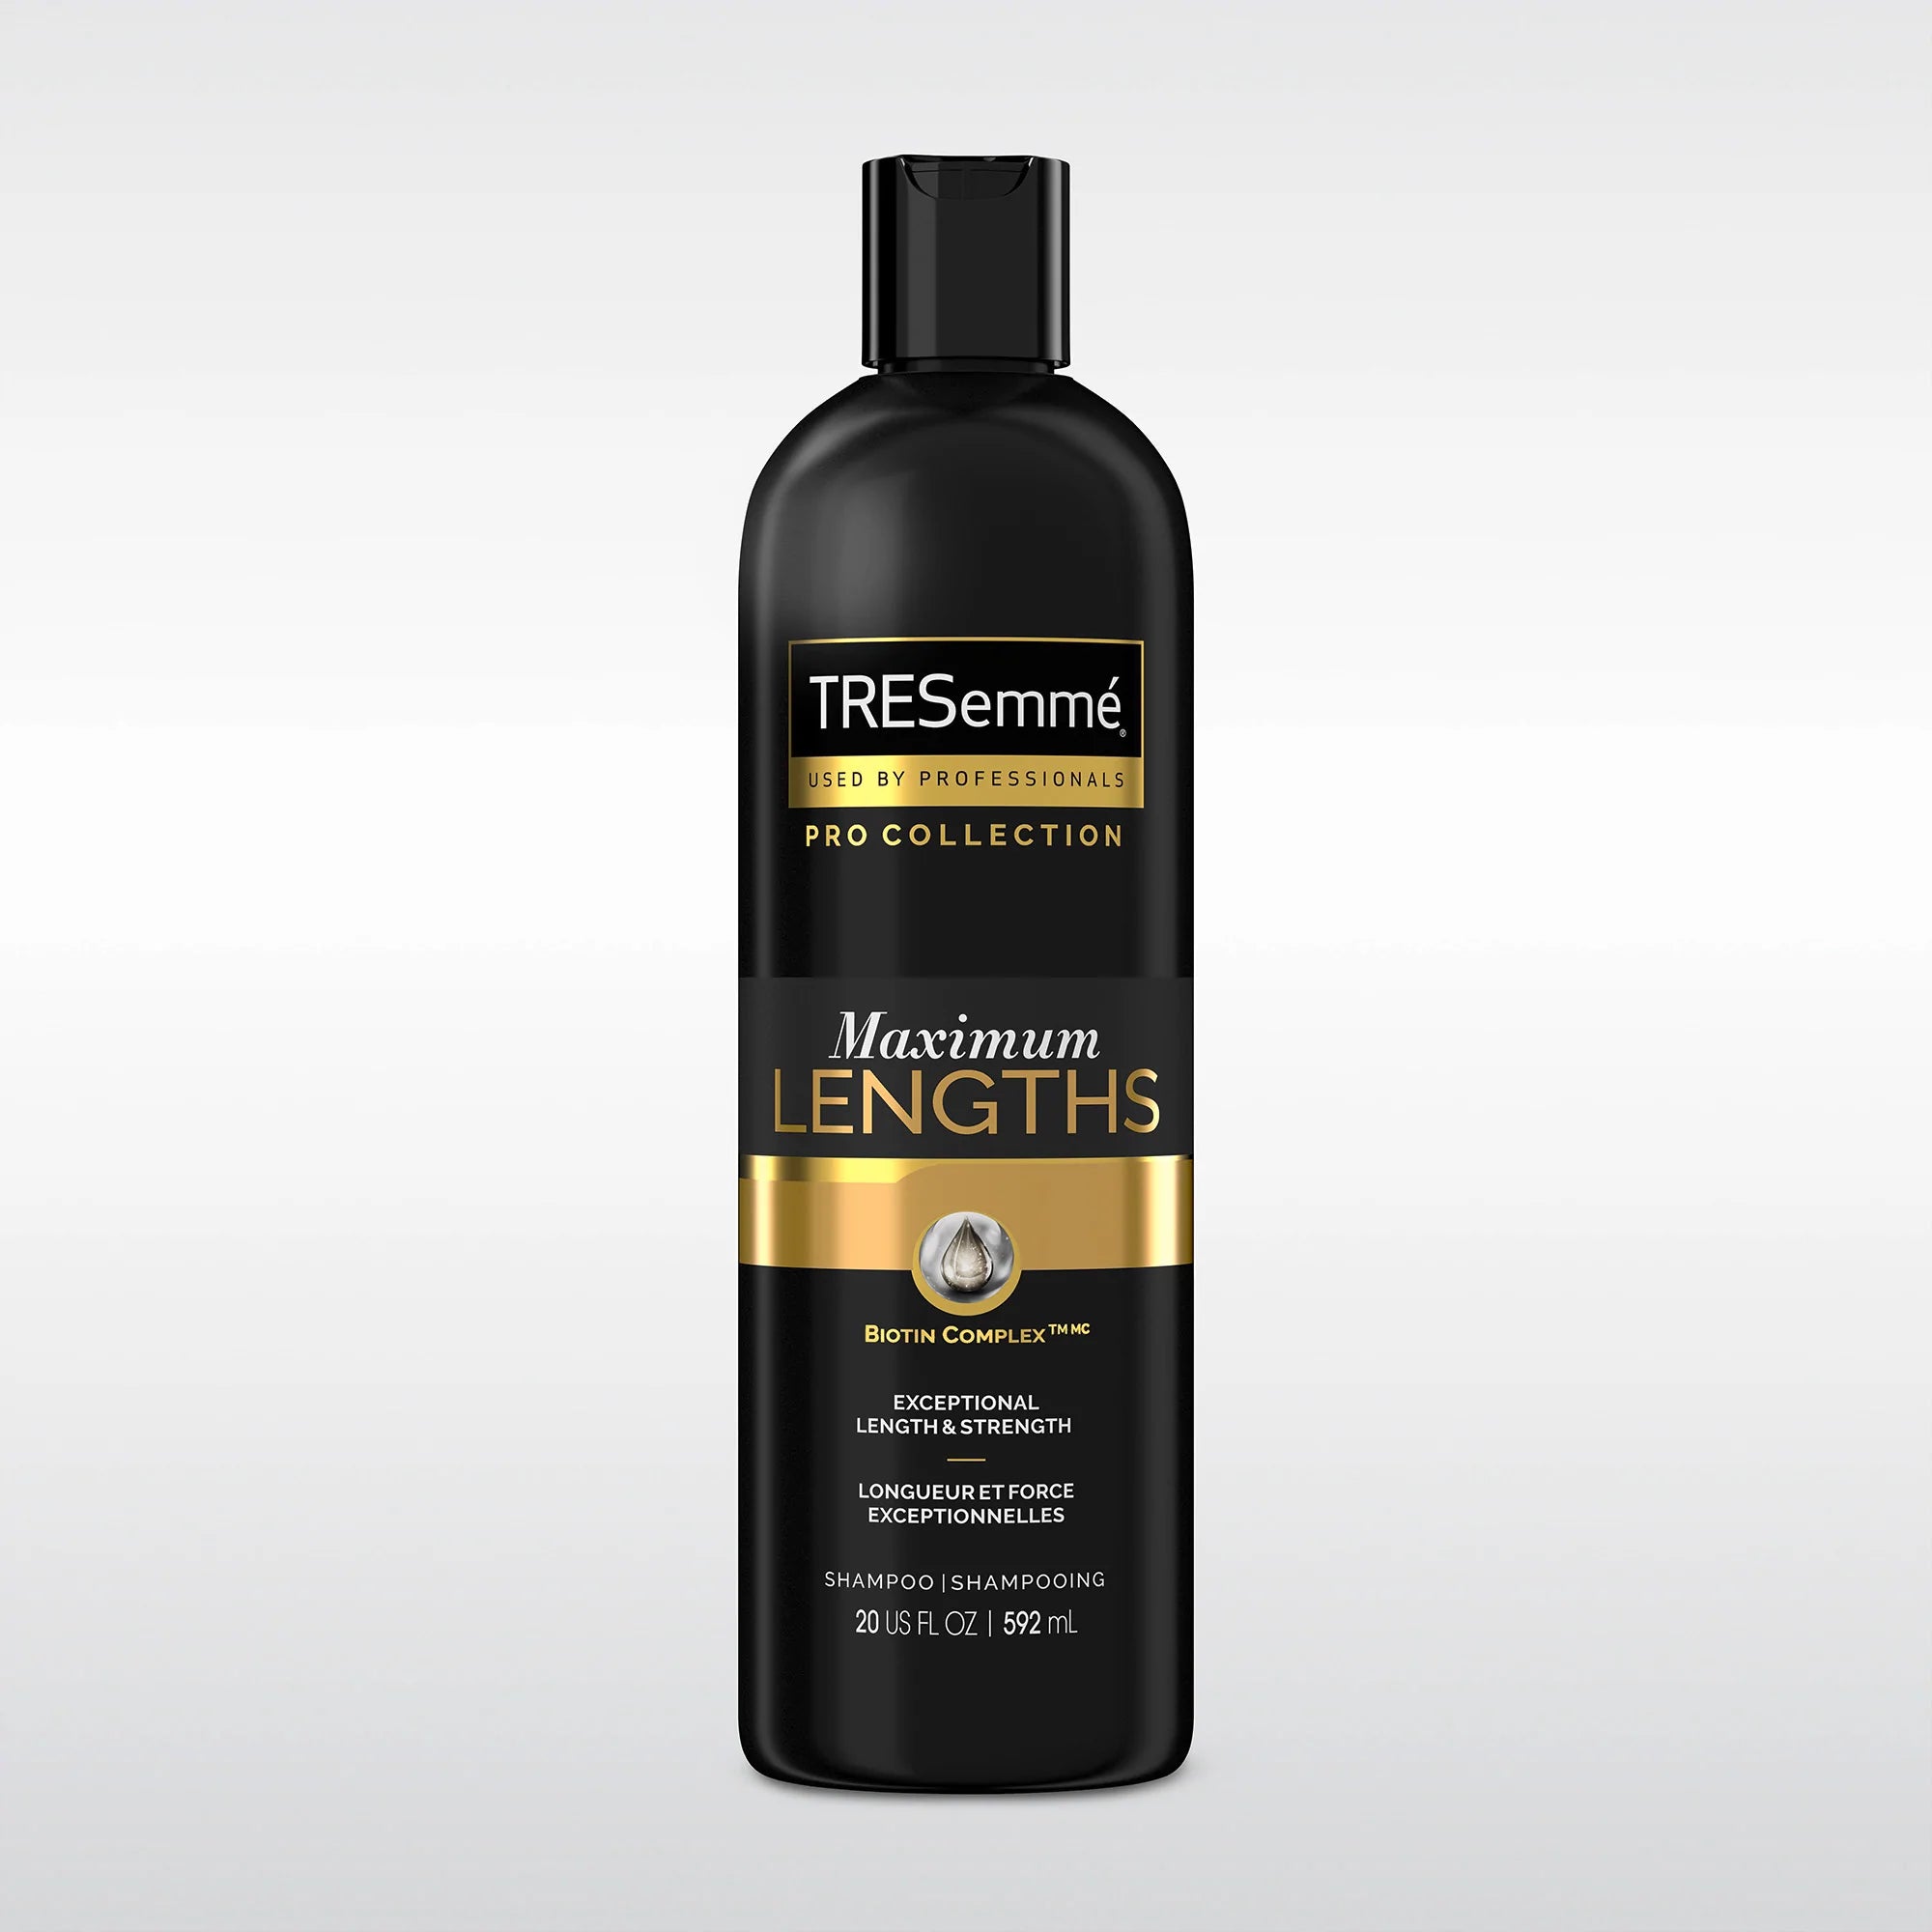 Tresemme Maximum Lengths Shampoo 592ml